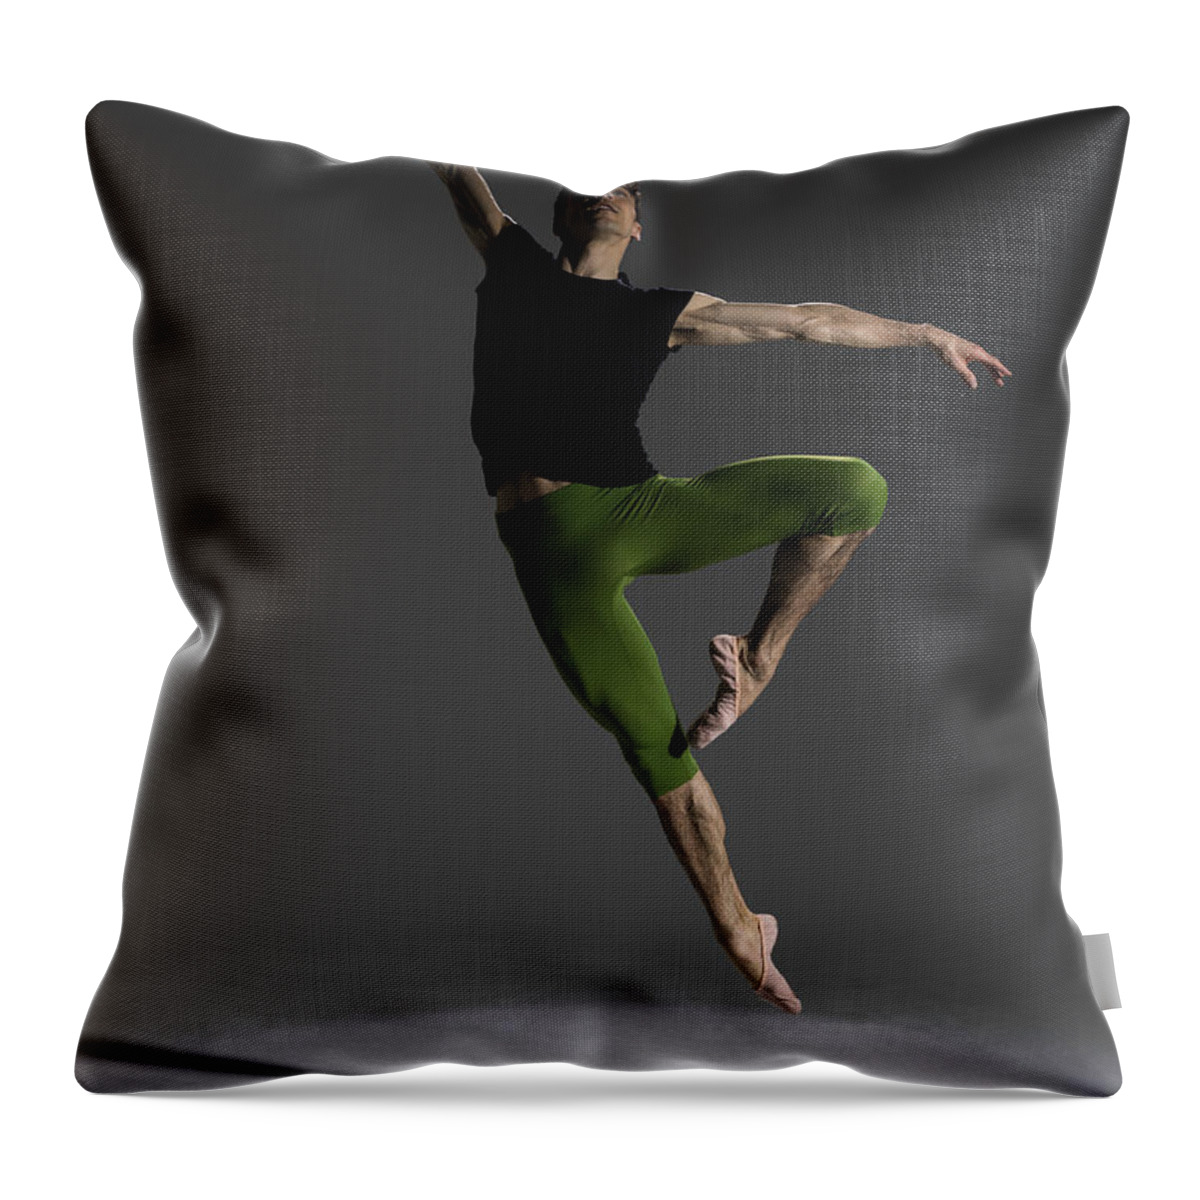 Ballet Dancer Throw Pillow featuring the photograph Male Ballet Dancer Jumping In Passé by Nisian Hughes